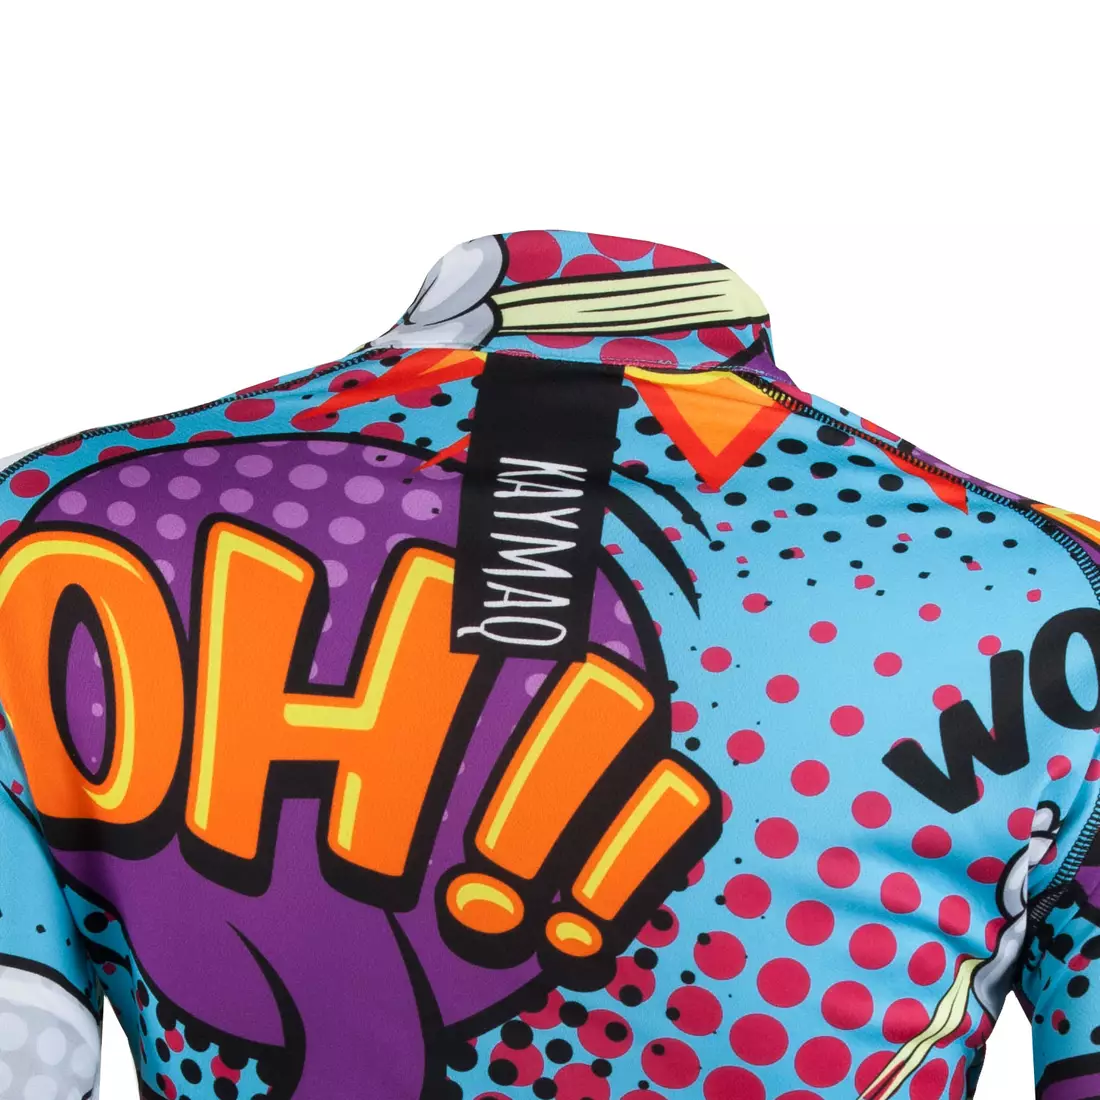 KAYMAQ DESIGN W27 women's cycling thermal jersey